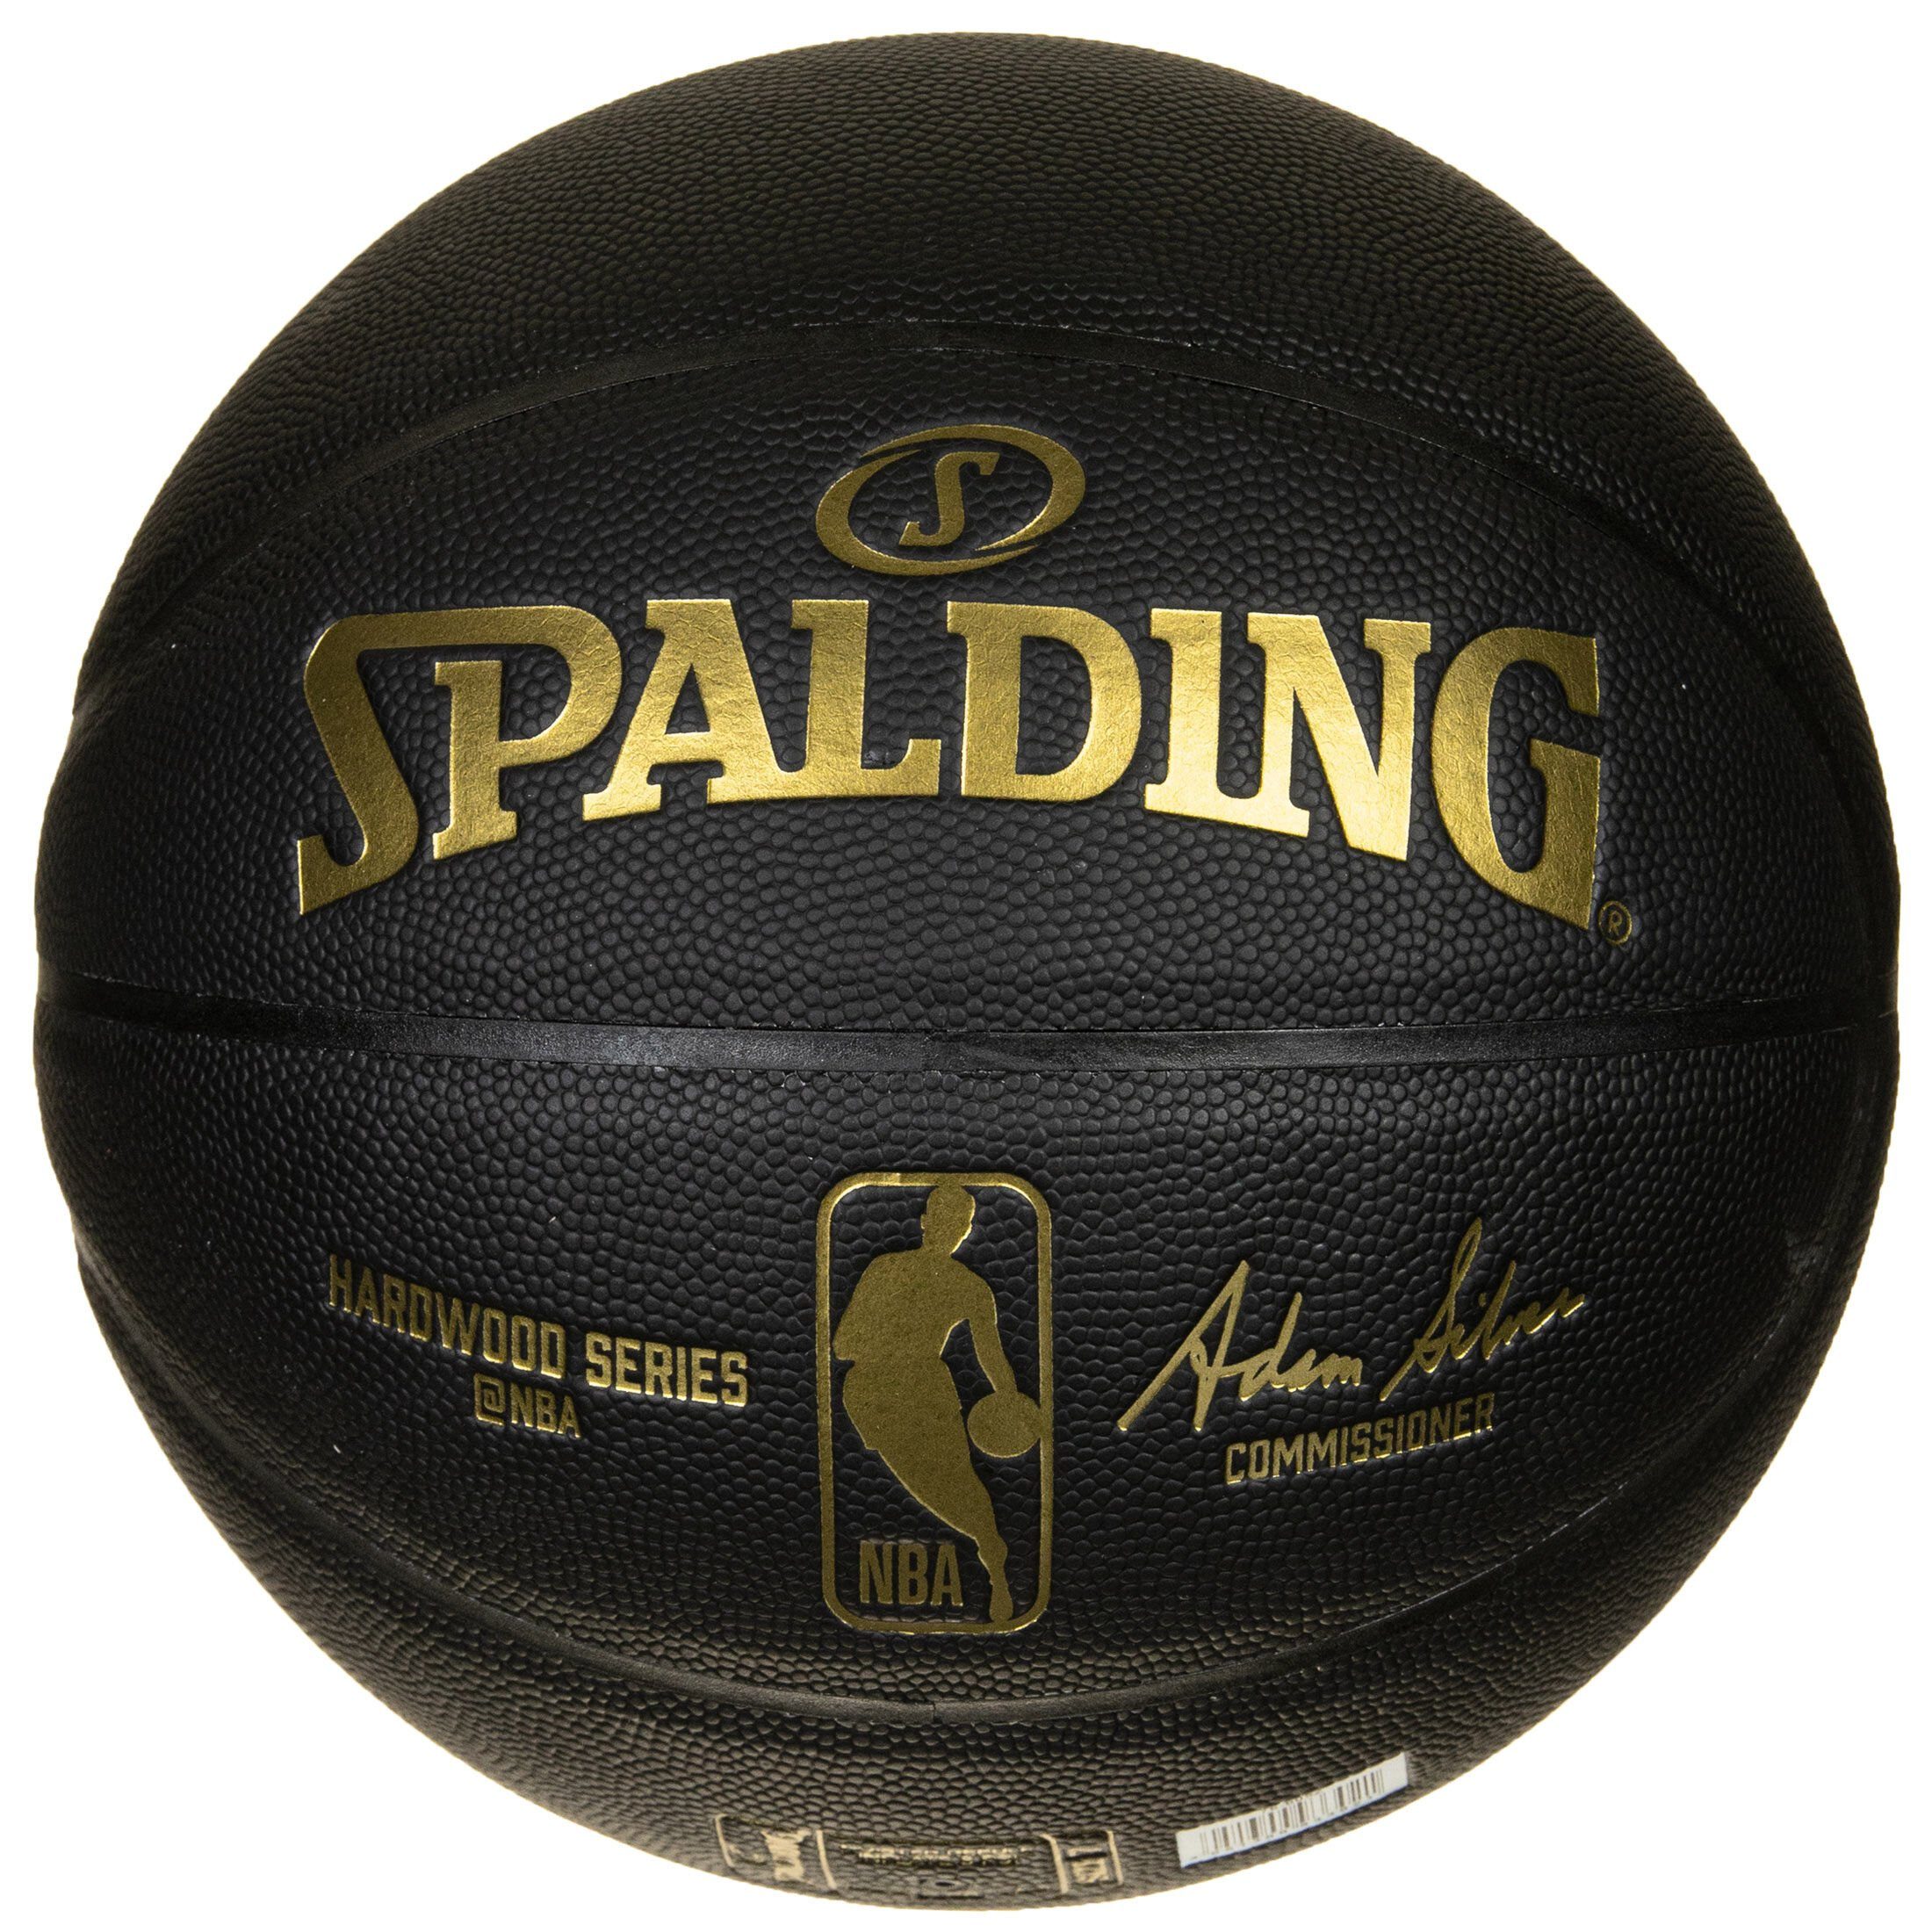 Hardwood Boston Spalding Celtics NBA Basketball Basketball